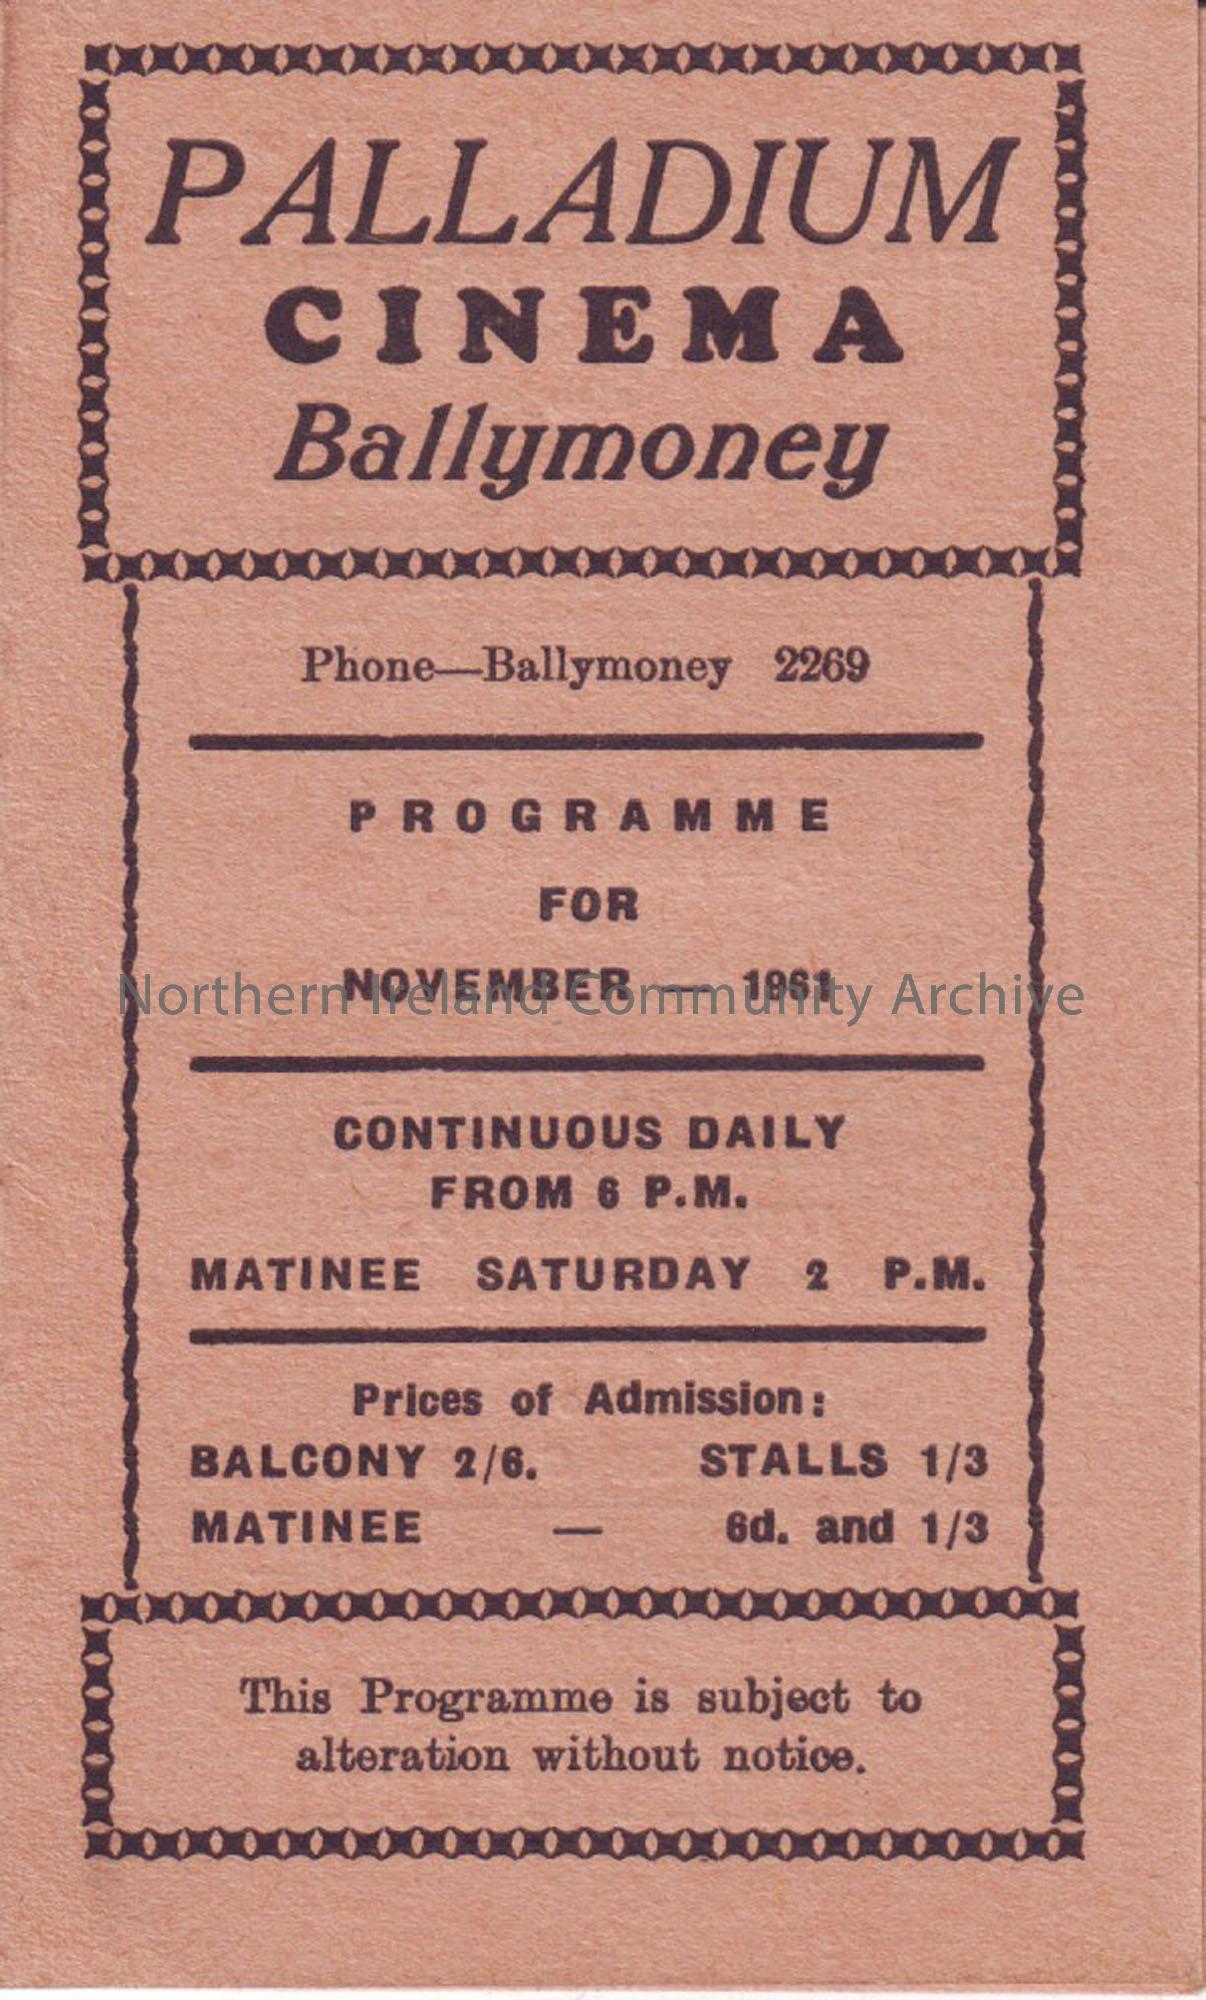 cream monthly programme for Ballymoney Palladium cinema- November 1961